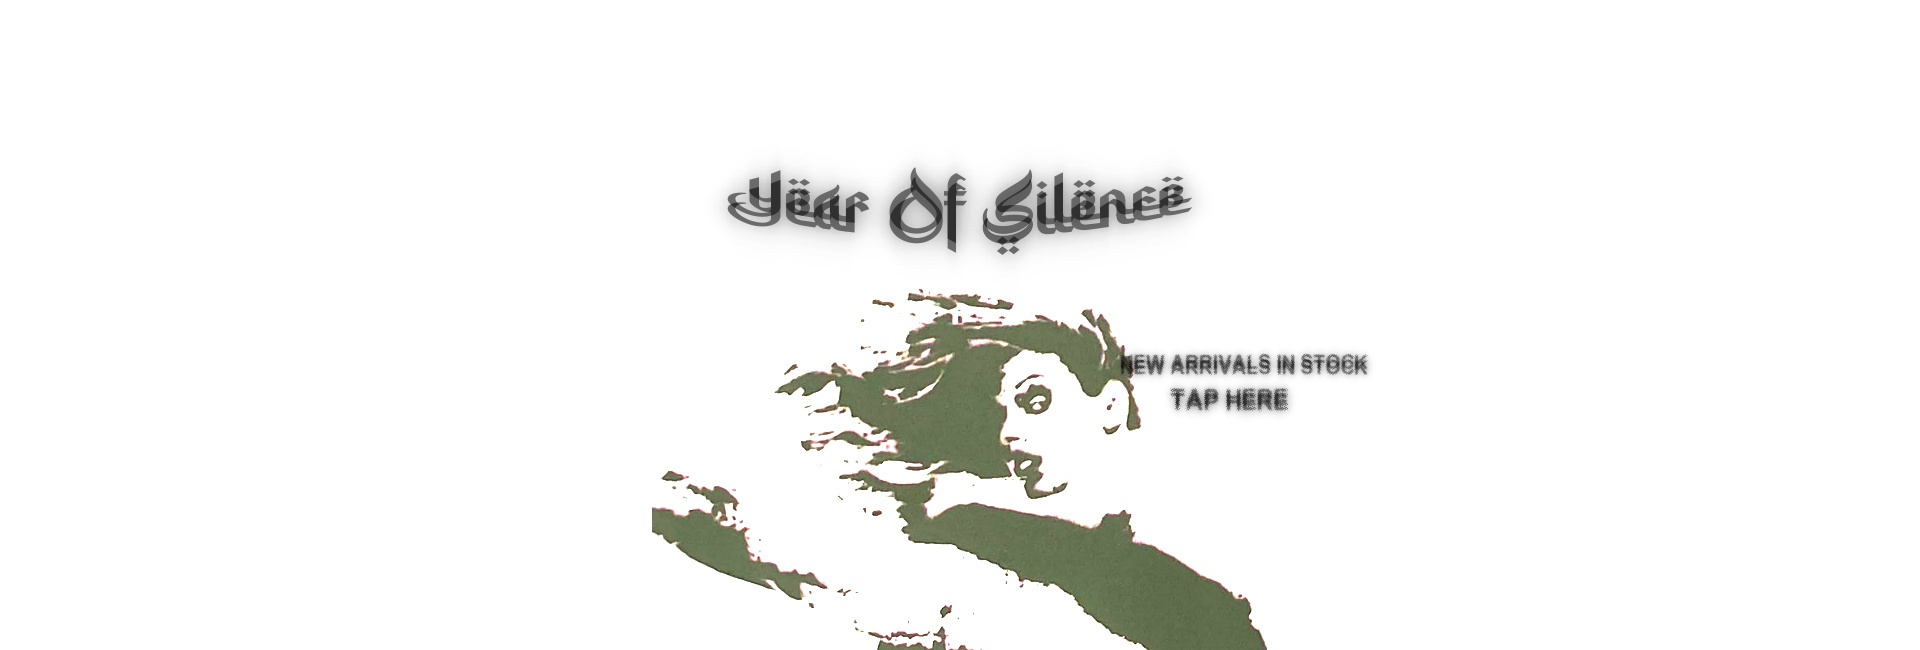 Year Of Silence2